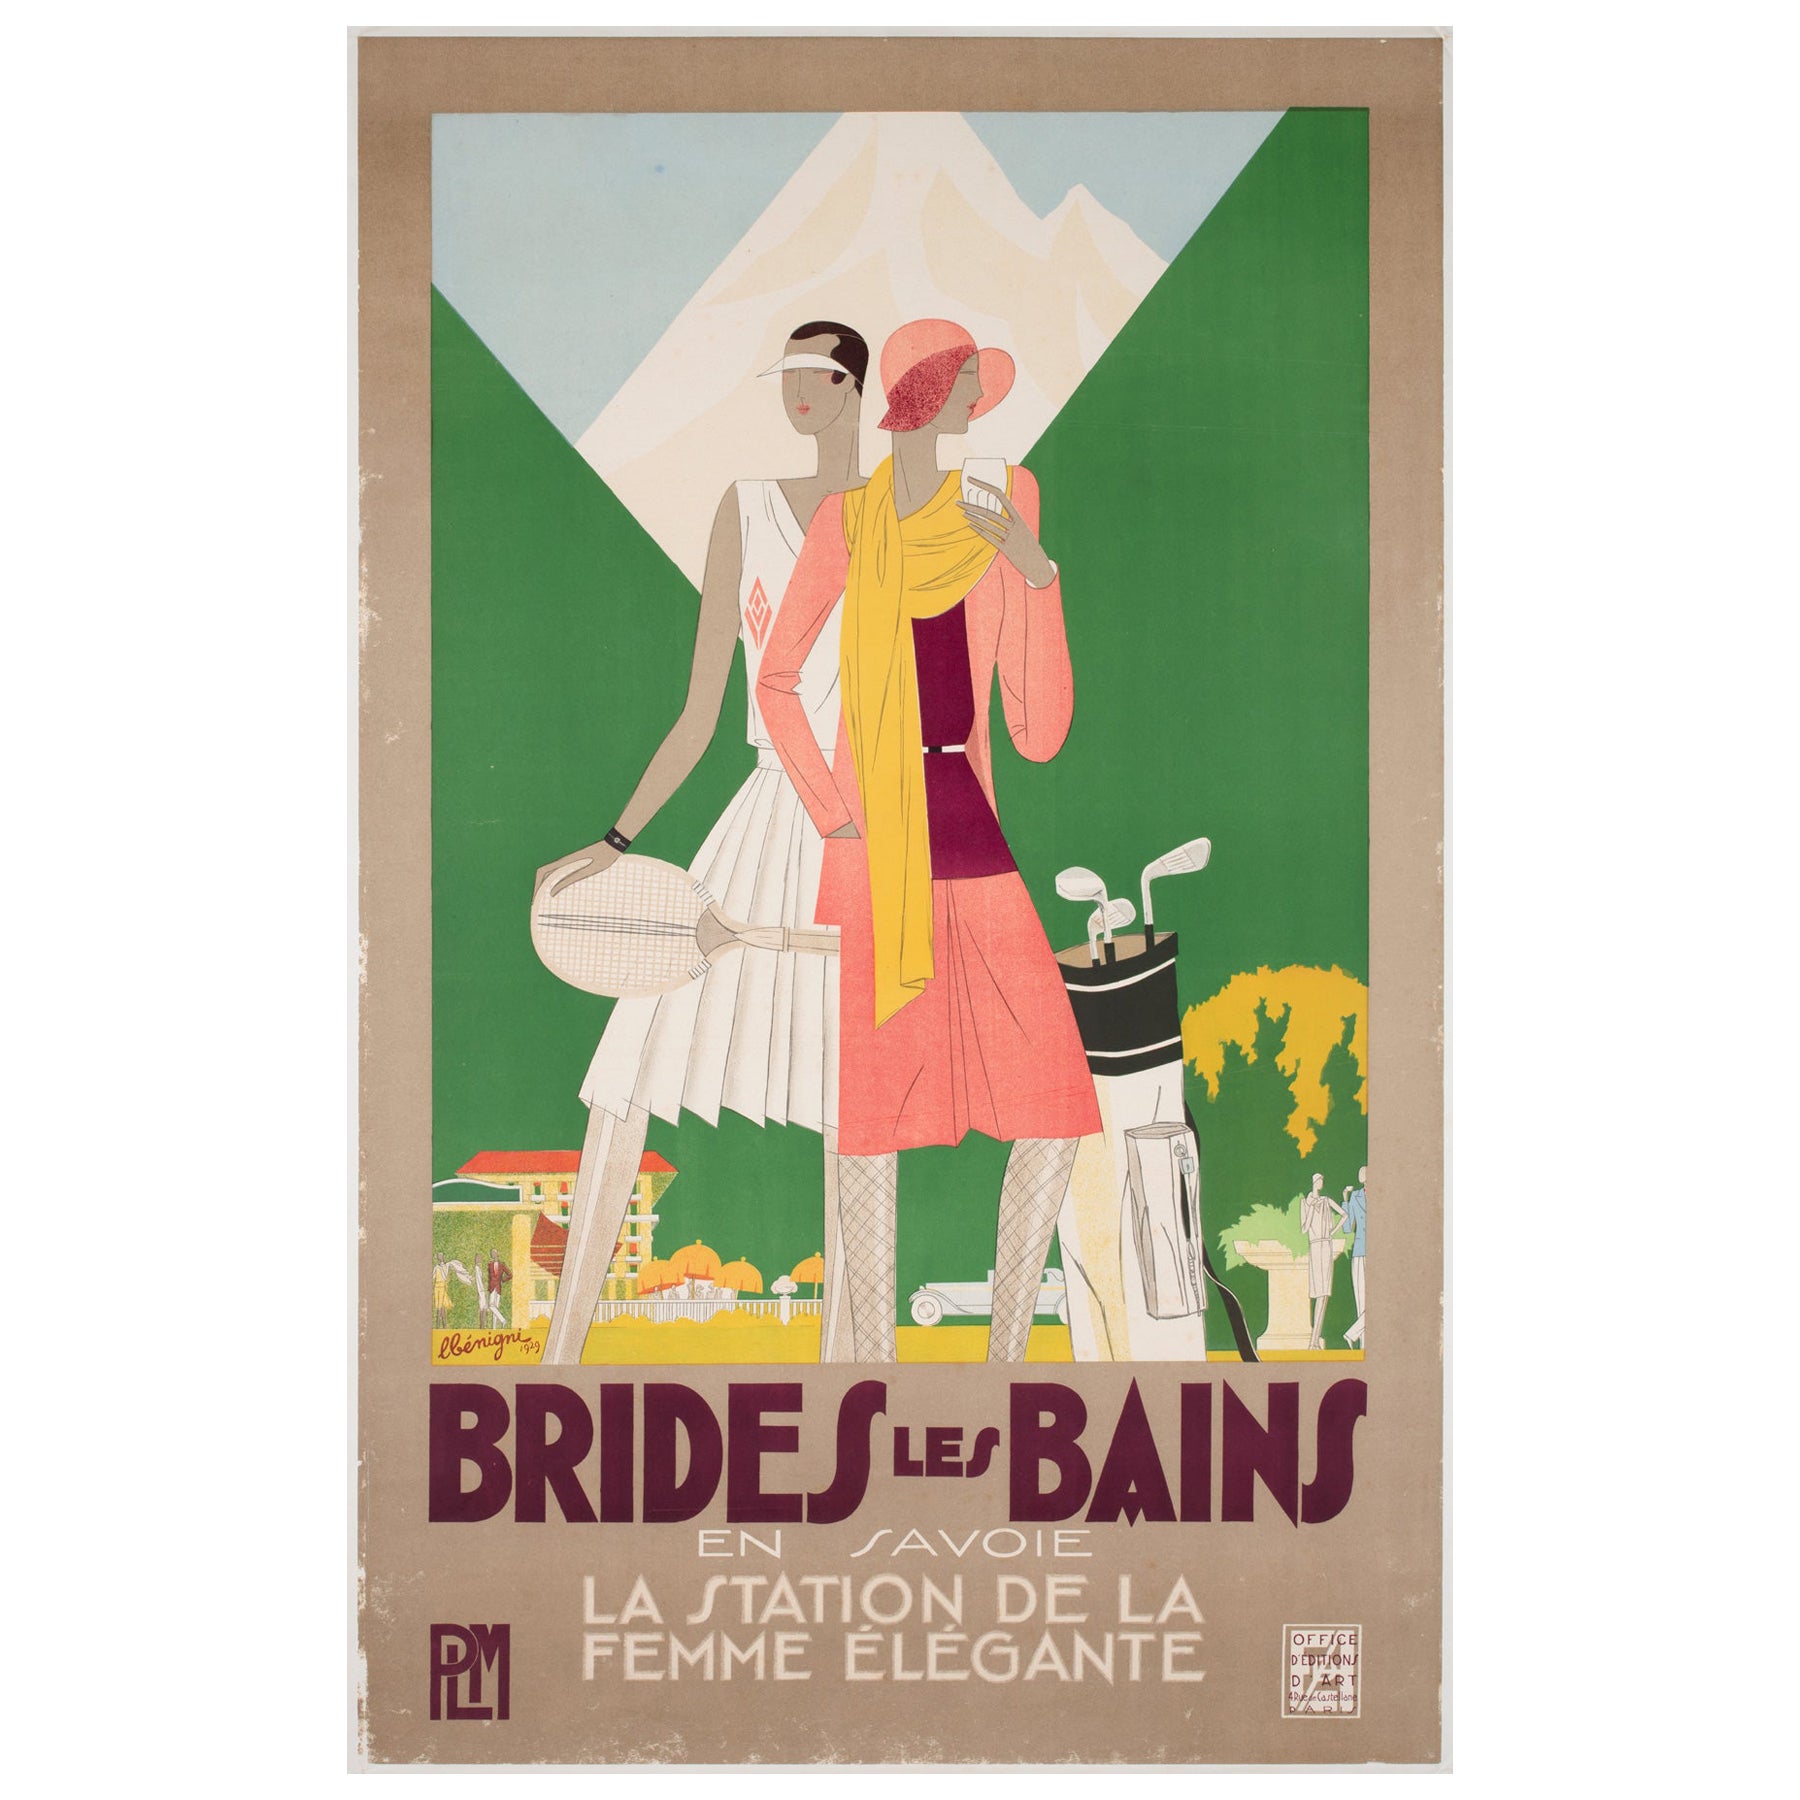 Brides les Bains 1929 French Railway Travel Advertising Poster, Leon Benigni